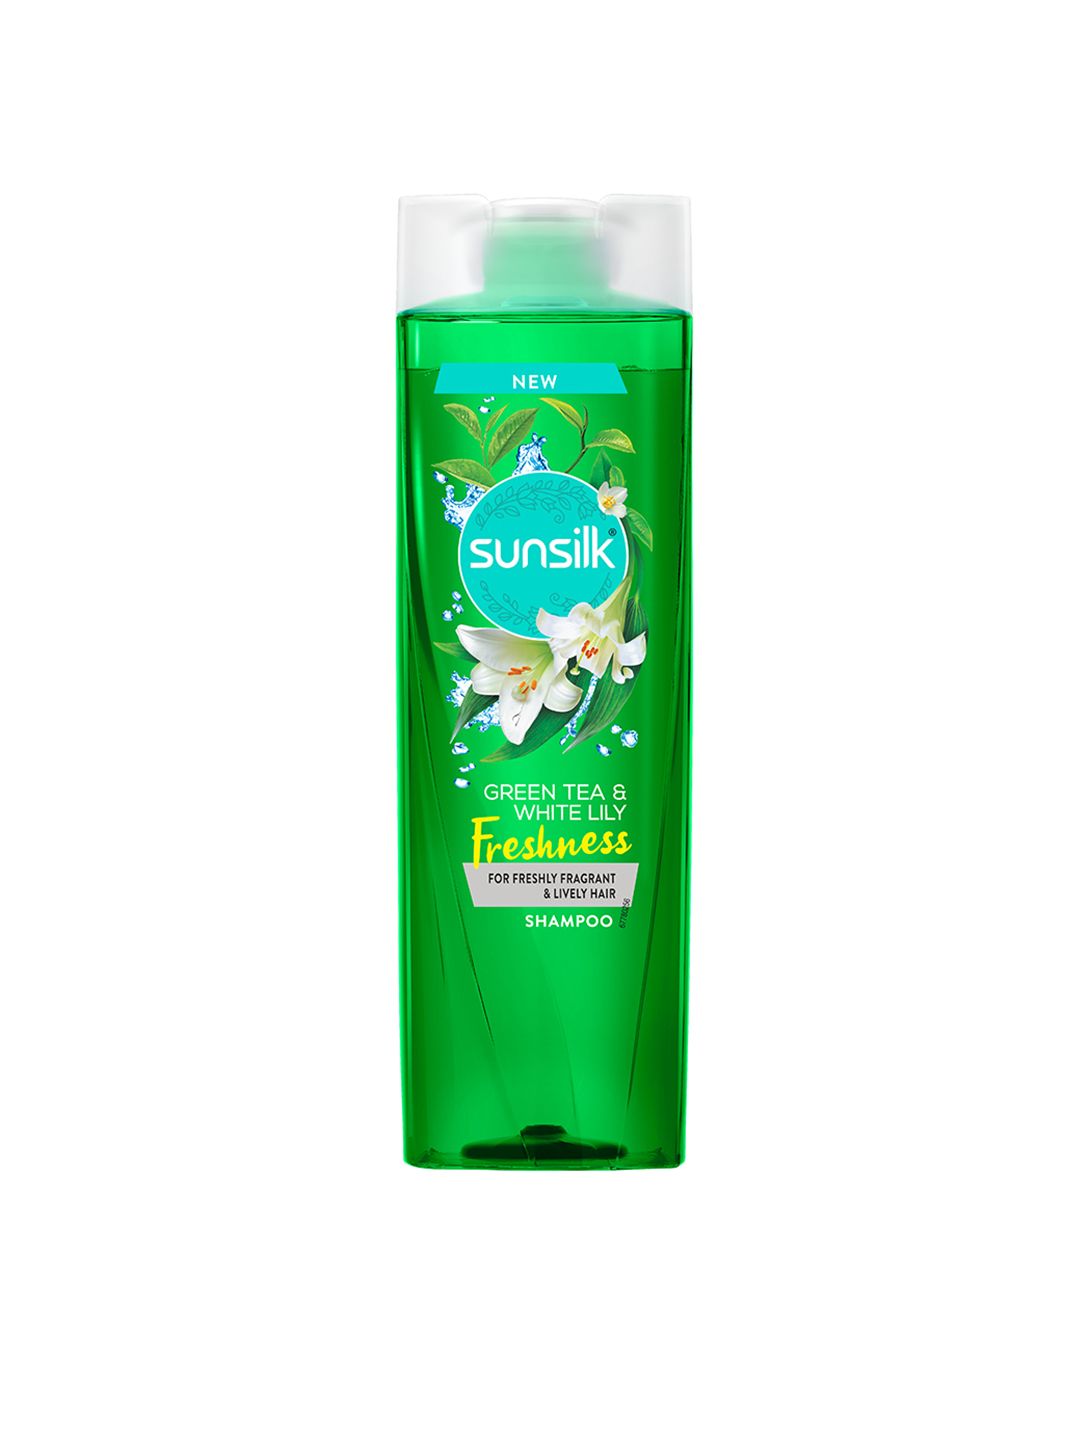 Sunsilk Green Tea and White Lily Freshness Hair Shampoo 195 ml Price in India